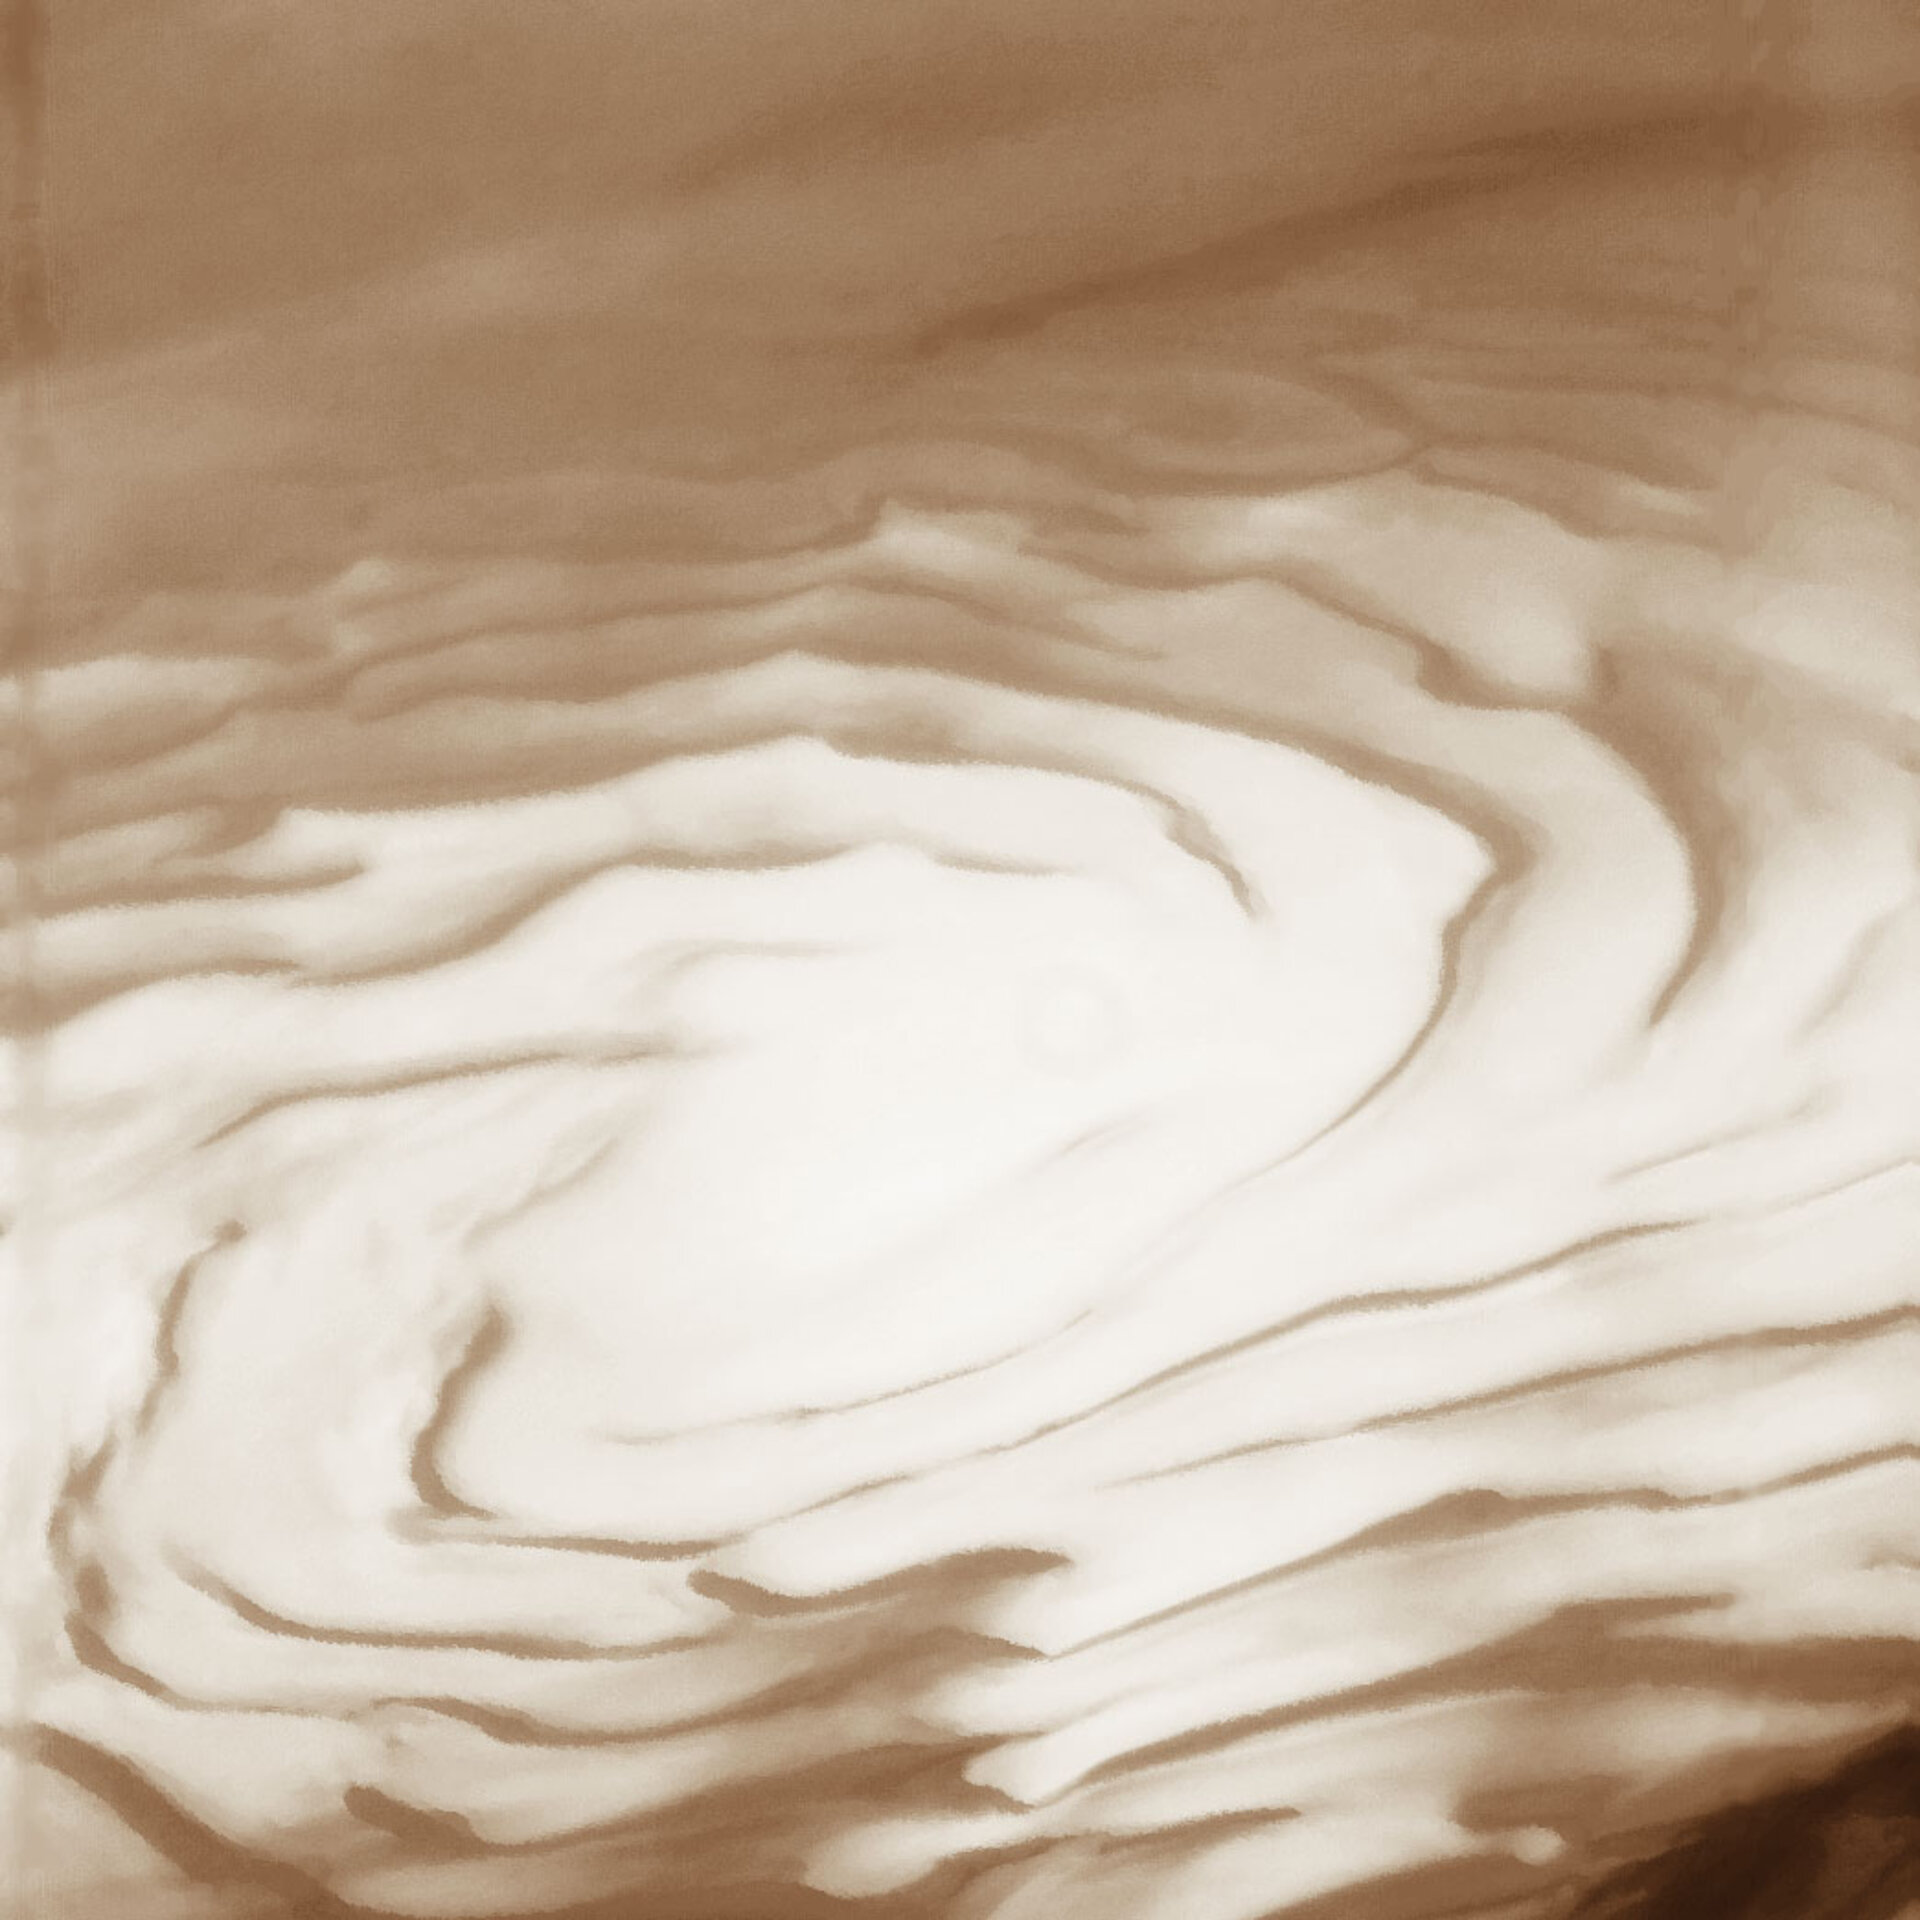 Martian polar ice cap viewed in 'normal' visible light